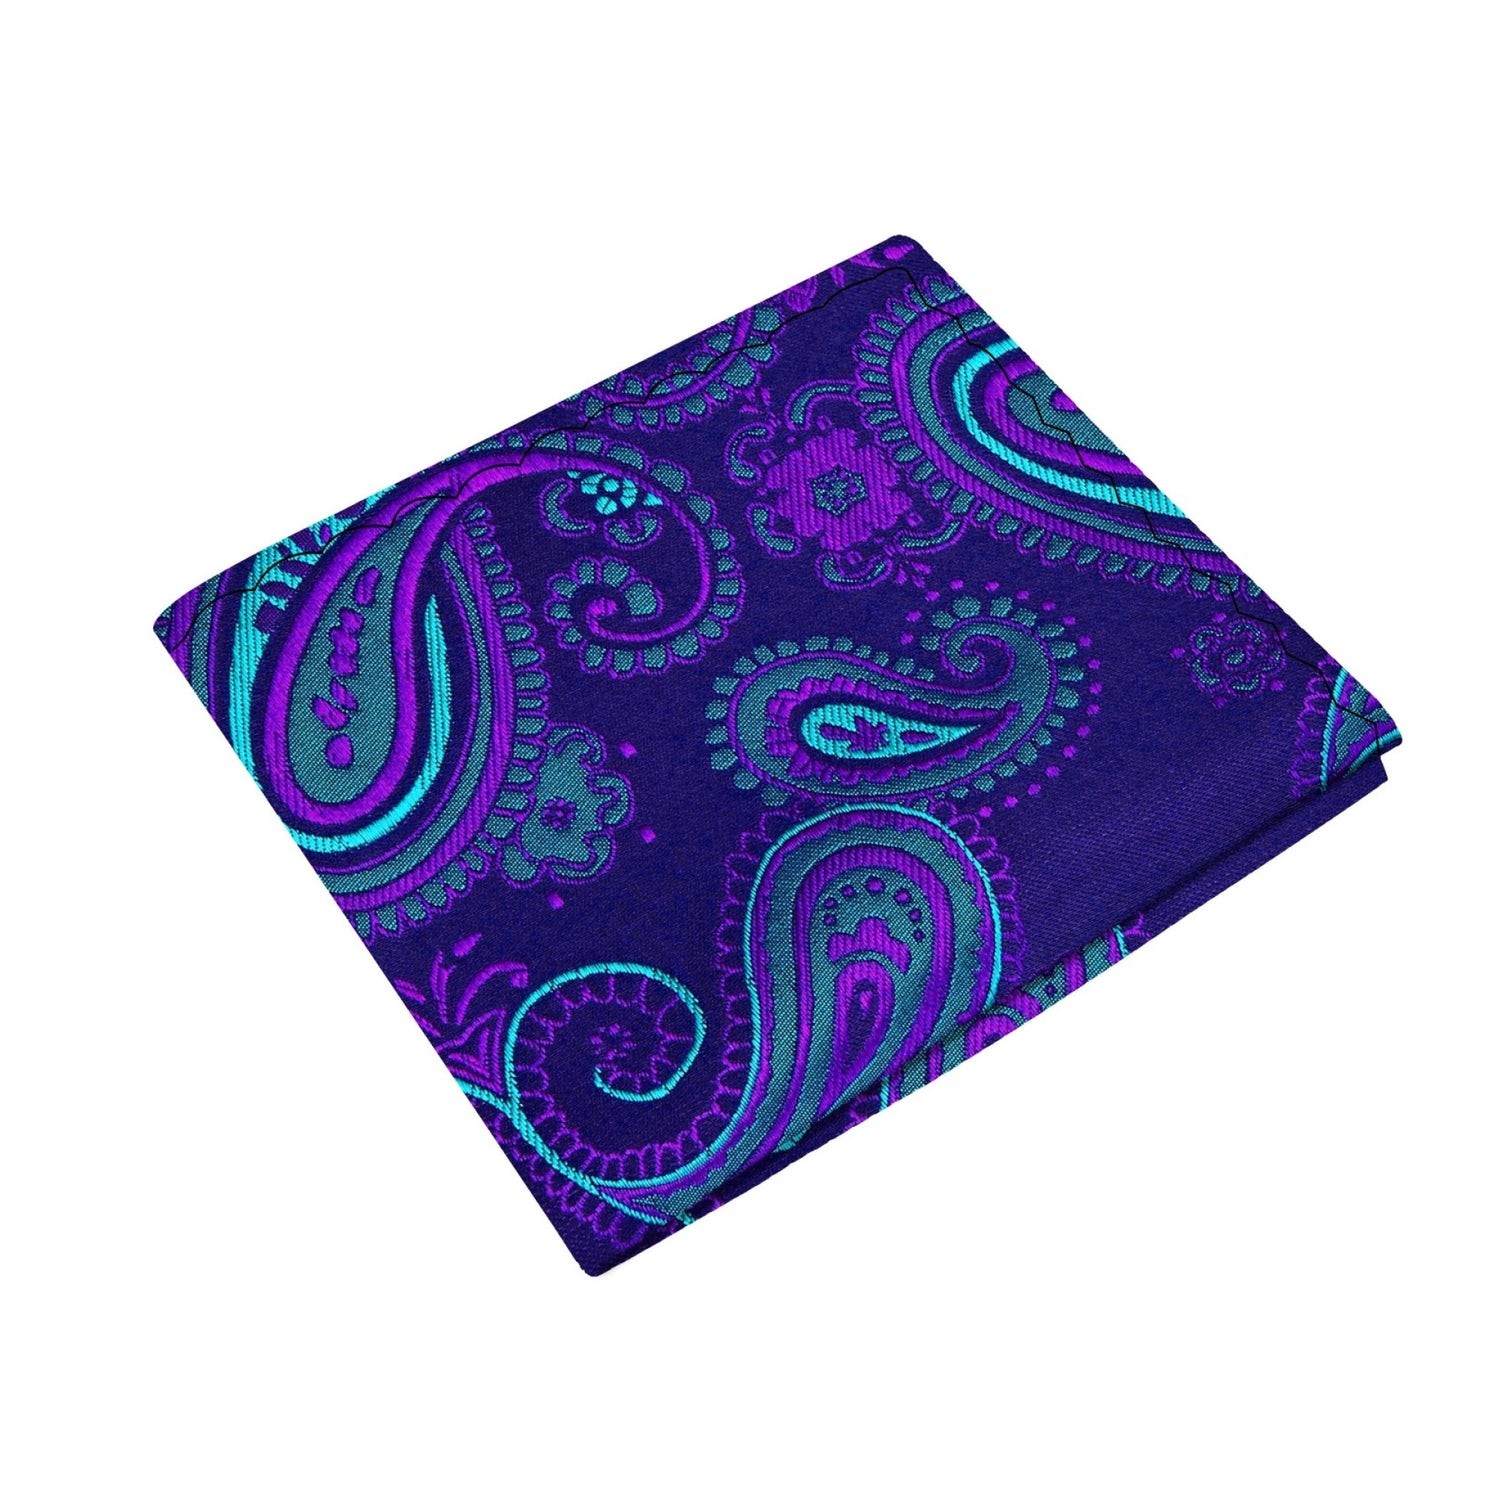 A Teal, Purple Paisley Pattern Silk Pocket Square